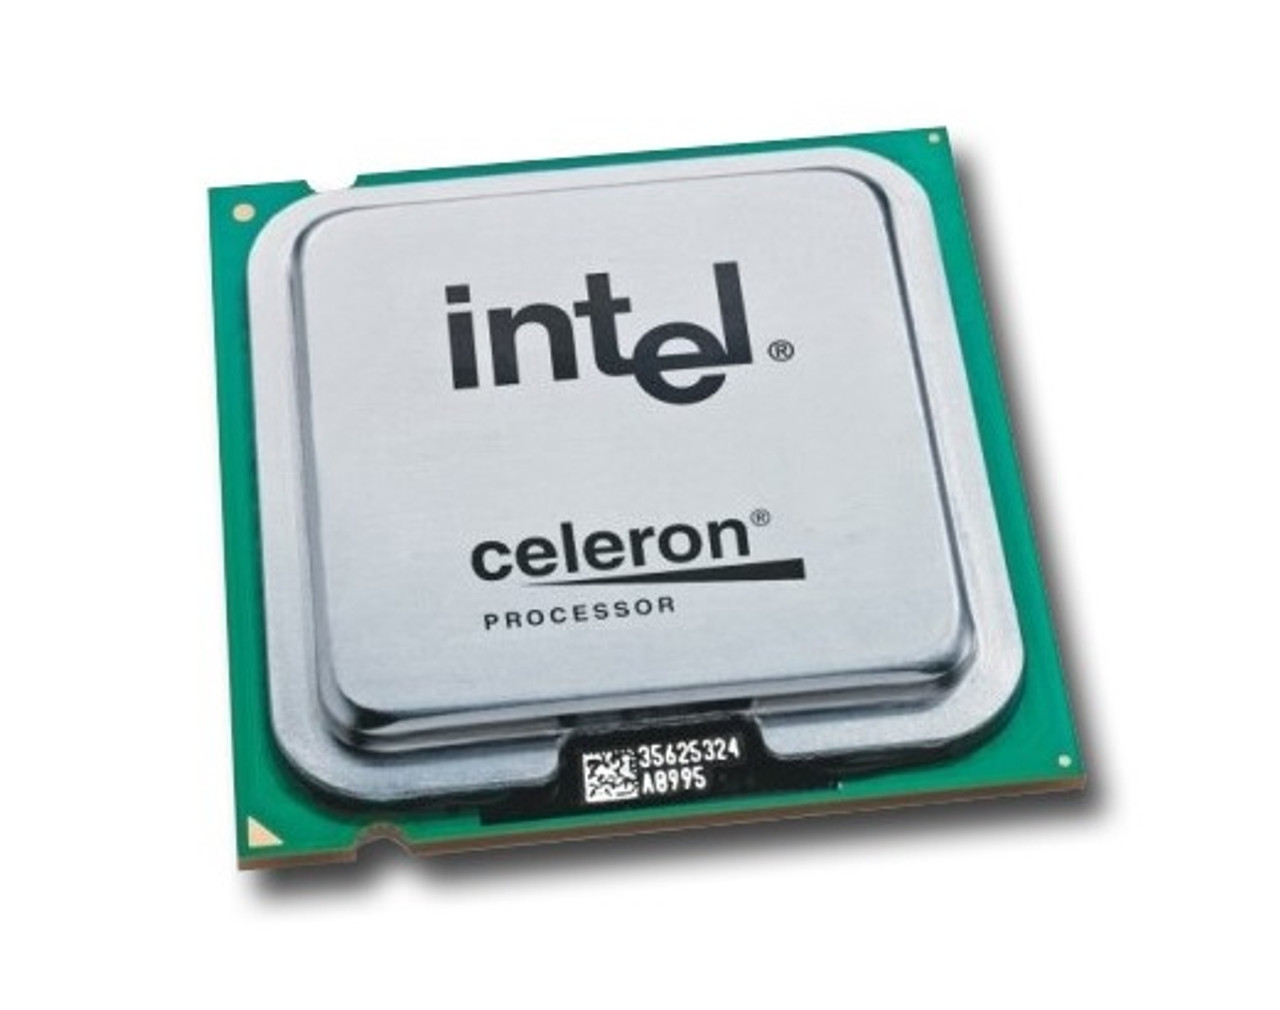 JM80547RE067256 - Intel Celeron D 330J 2.66GHz 533MHz FSB 256KB L2 Cache Socket 775 Processor